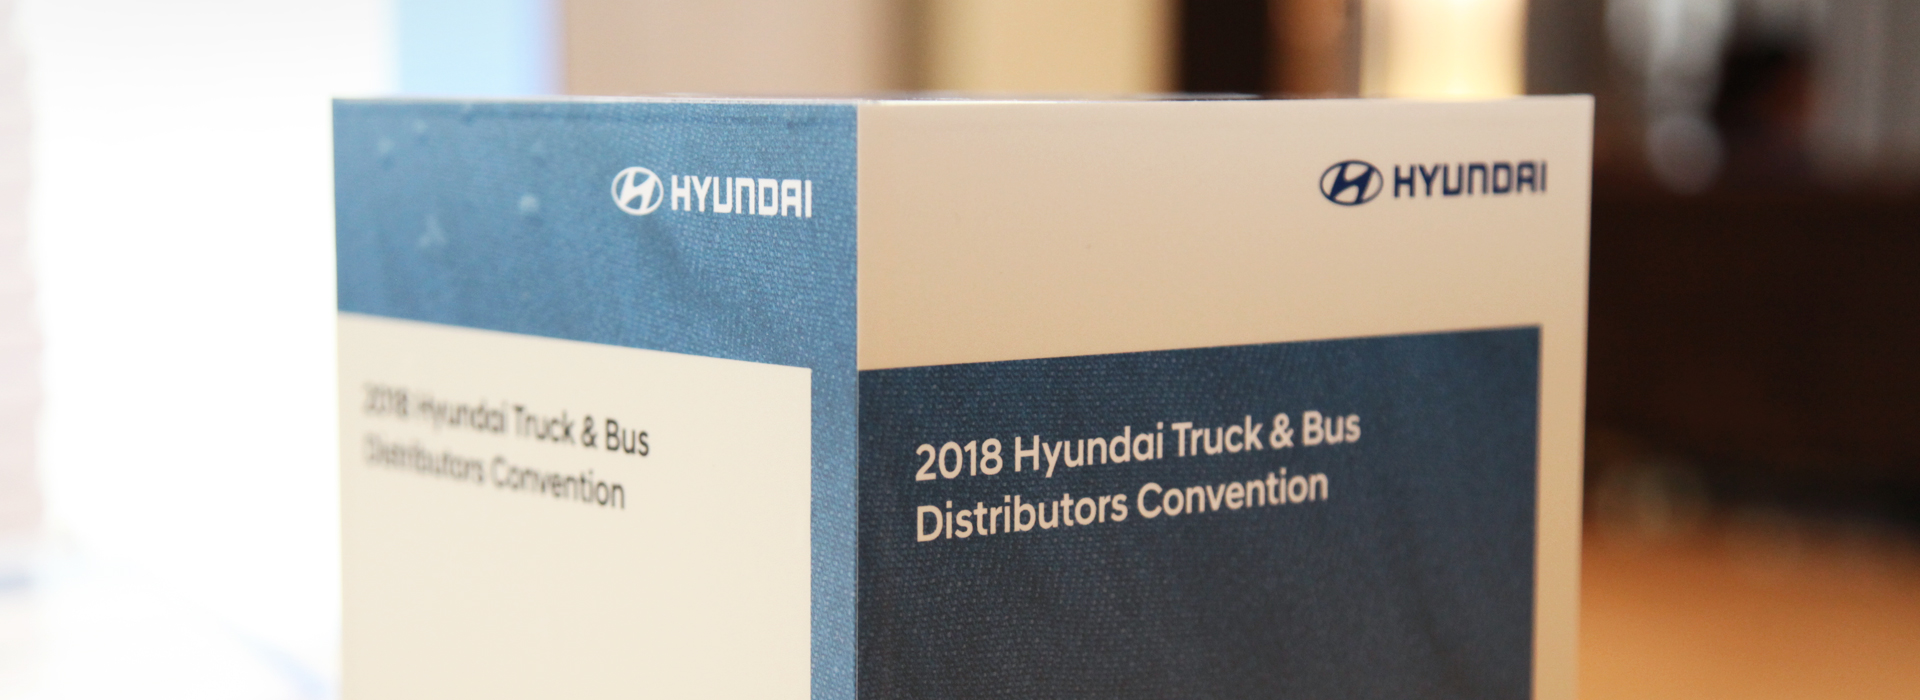 Hyundai Truck and Bus Distributors Convention 2018 Slider Image4